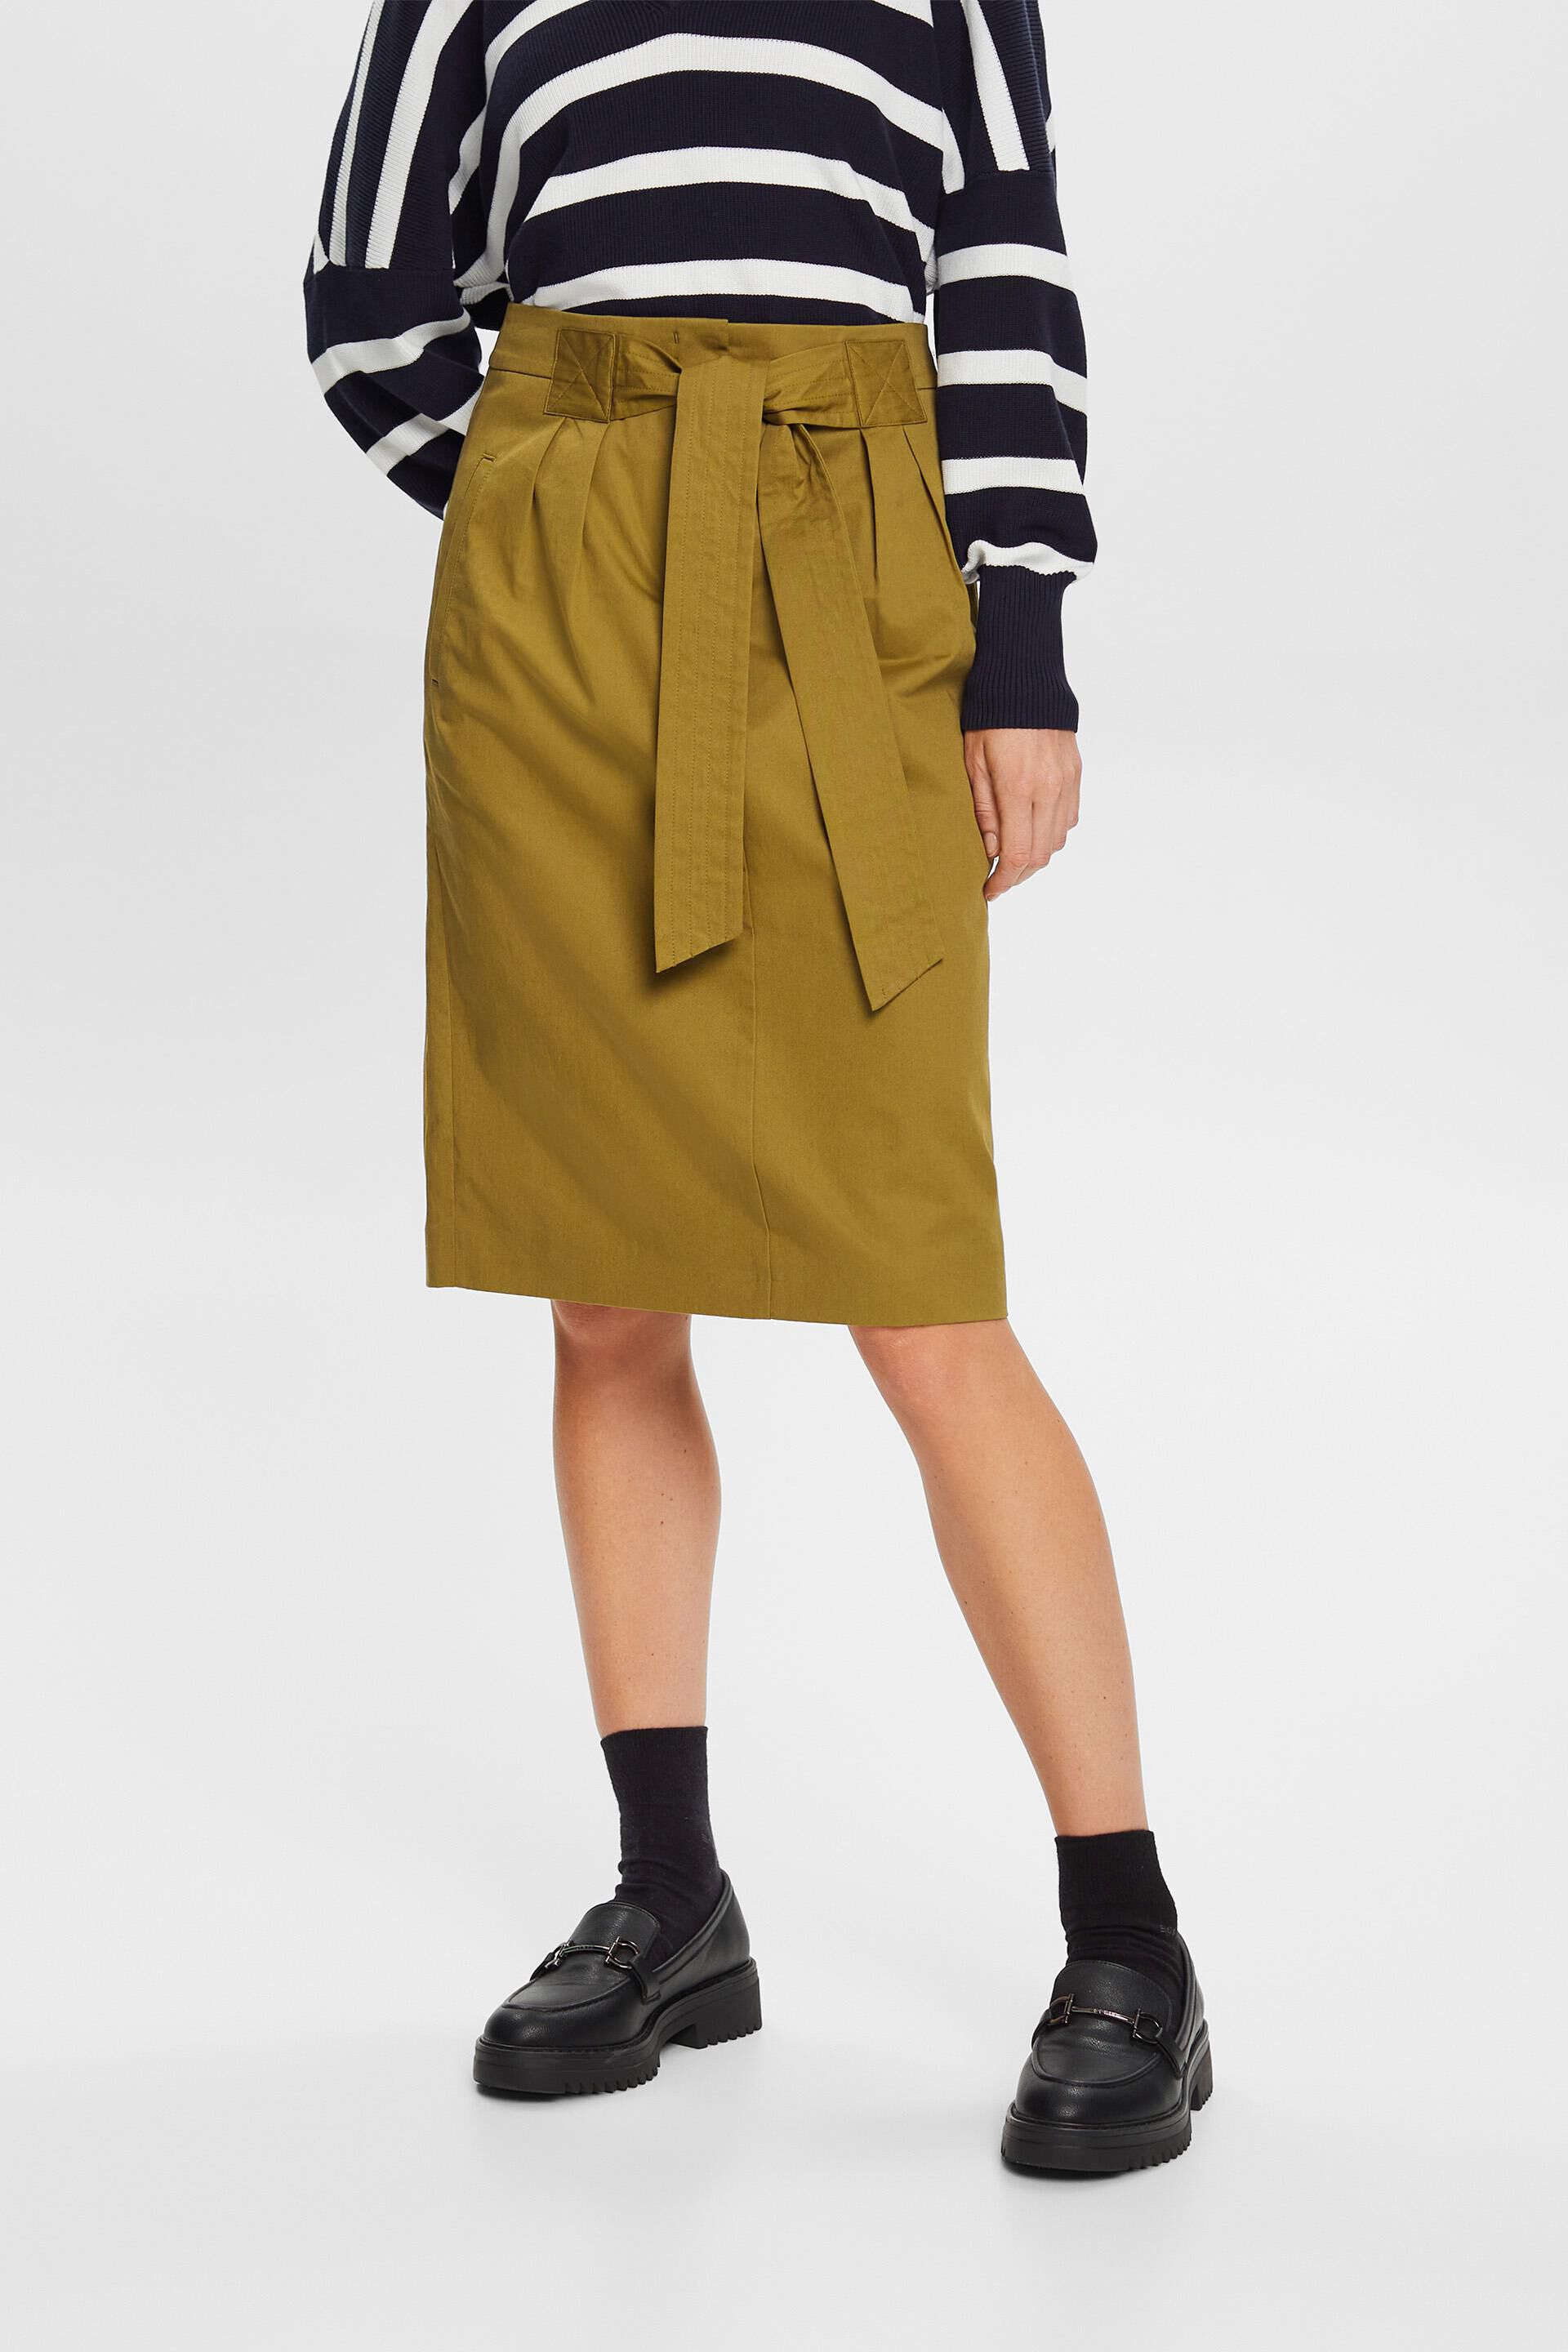 Esprit knee skirt, cotton Belted length 100%